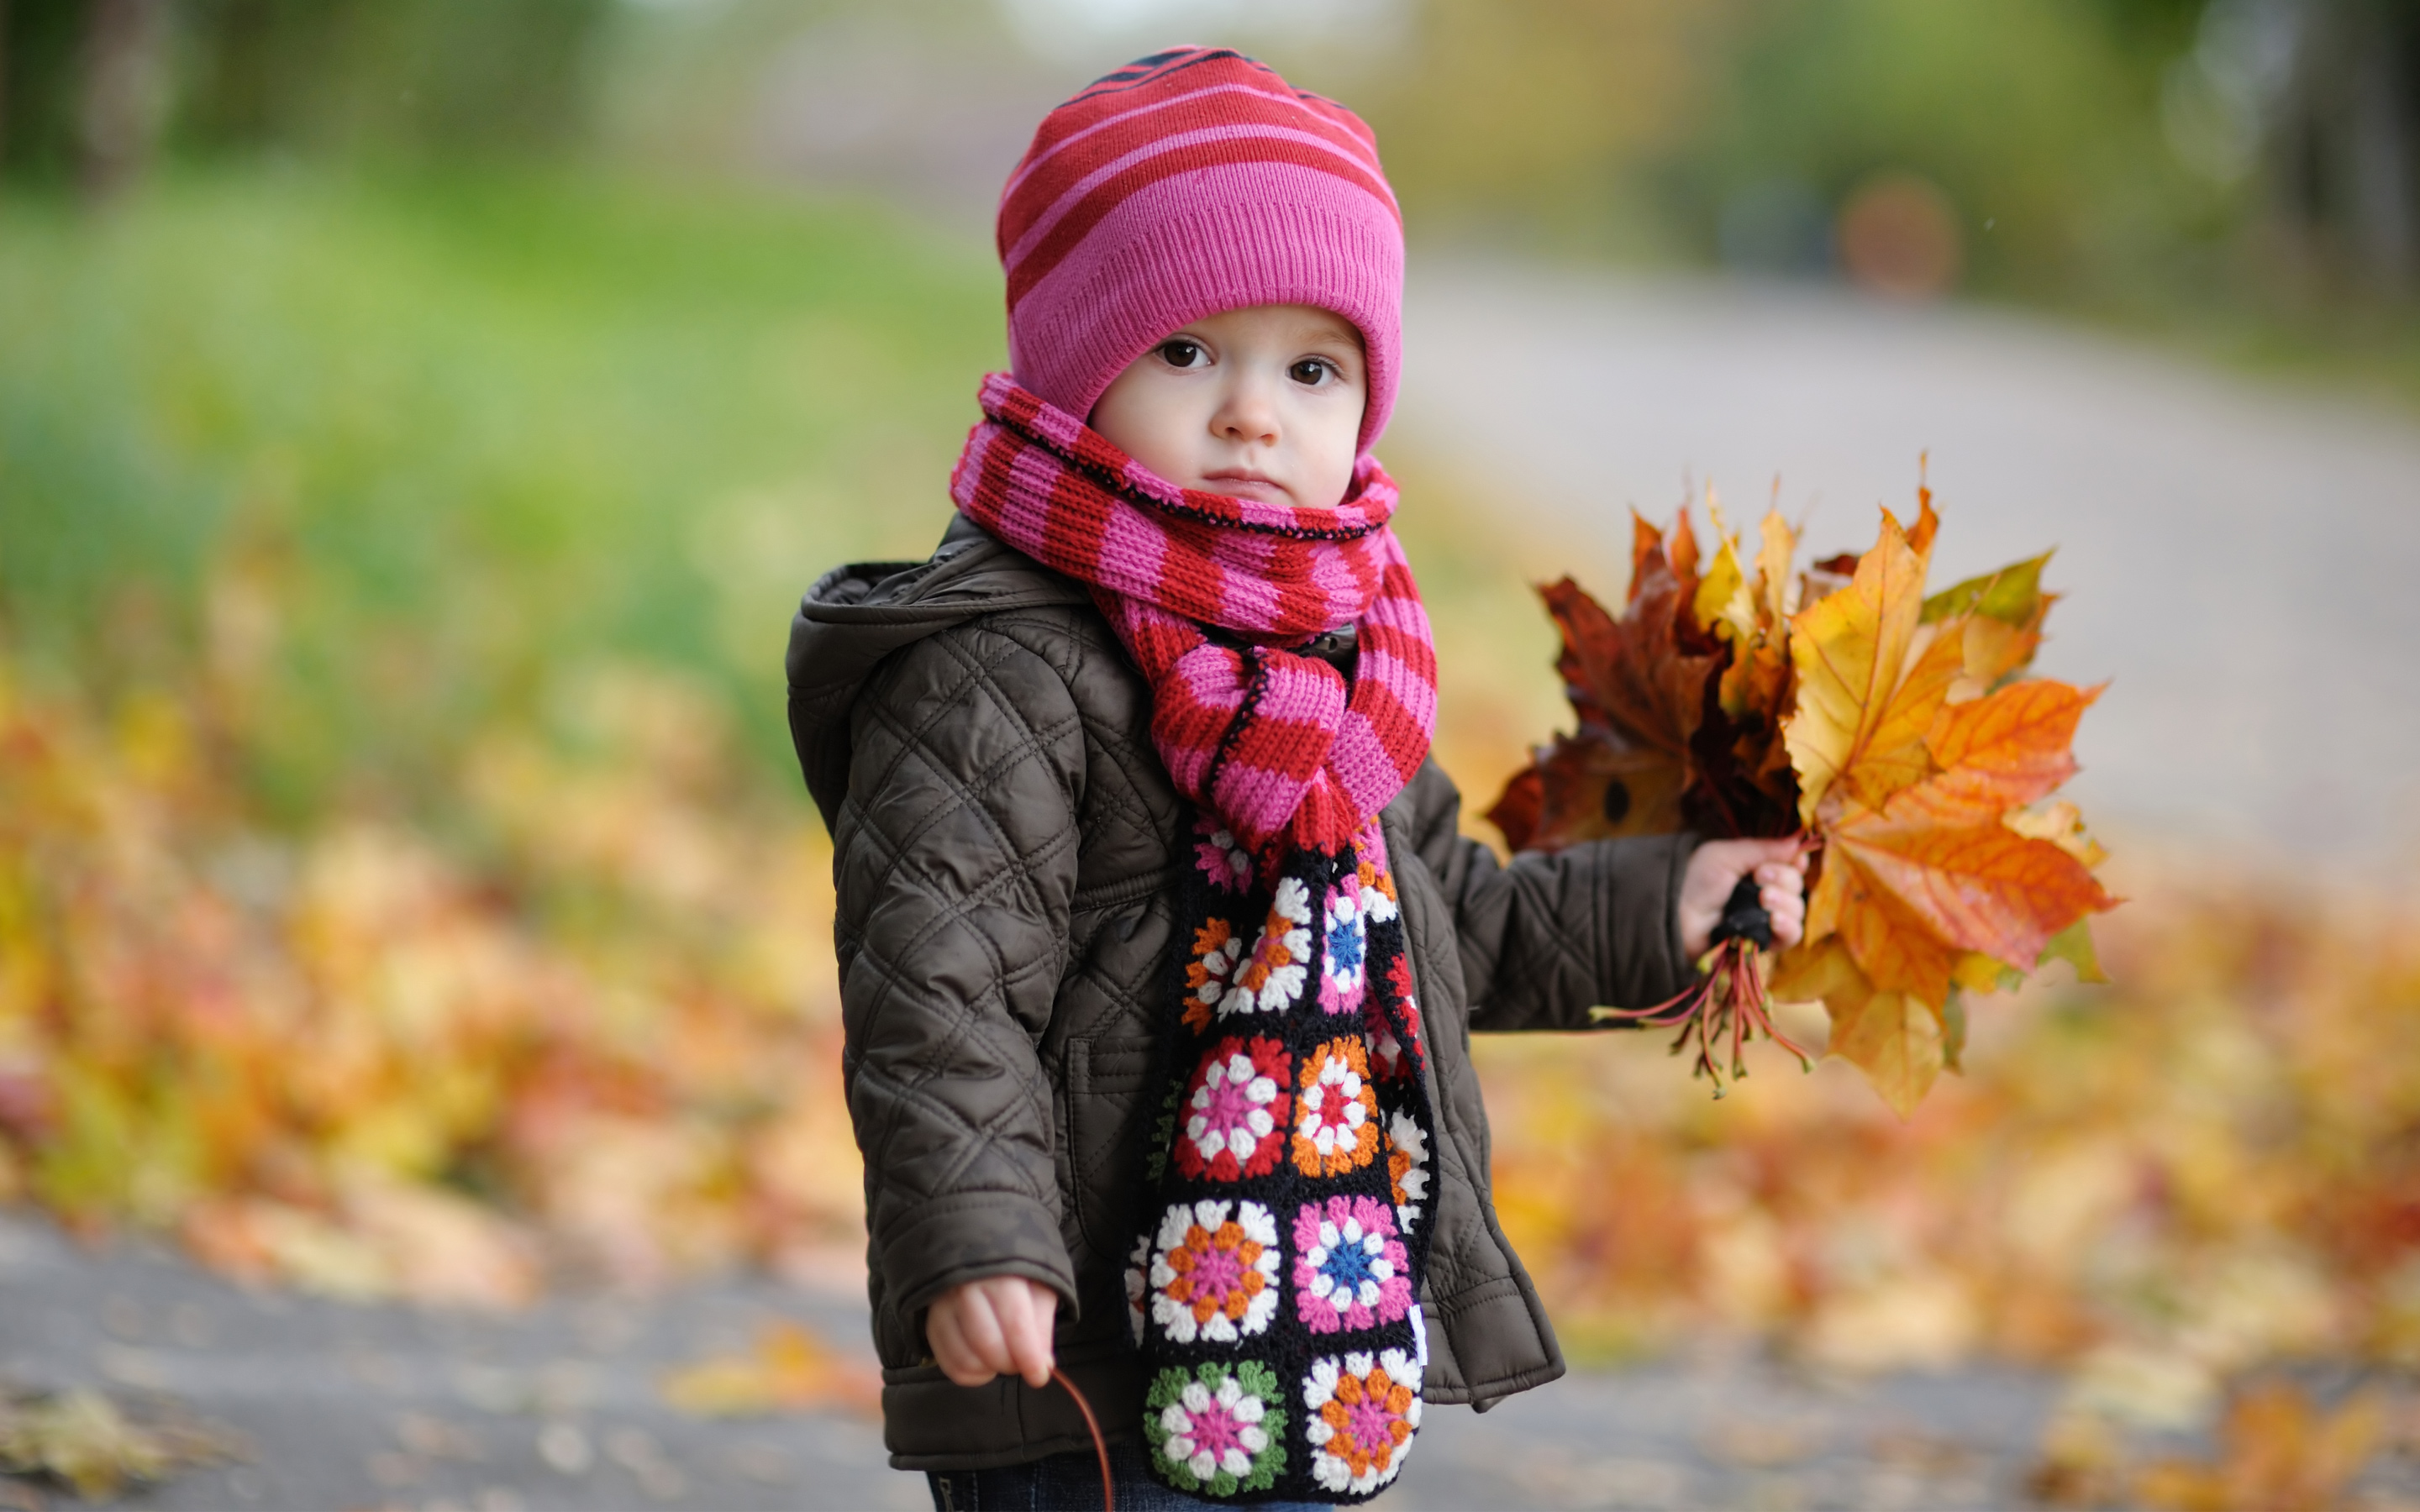 Cute Baby in Autumn1165110955 - Cute Baby in Autumn - Sleeping, Leaves, Cute, Baby, Autumn